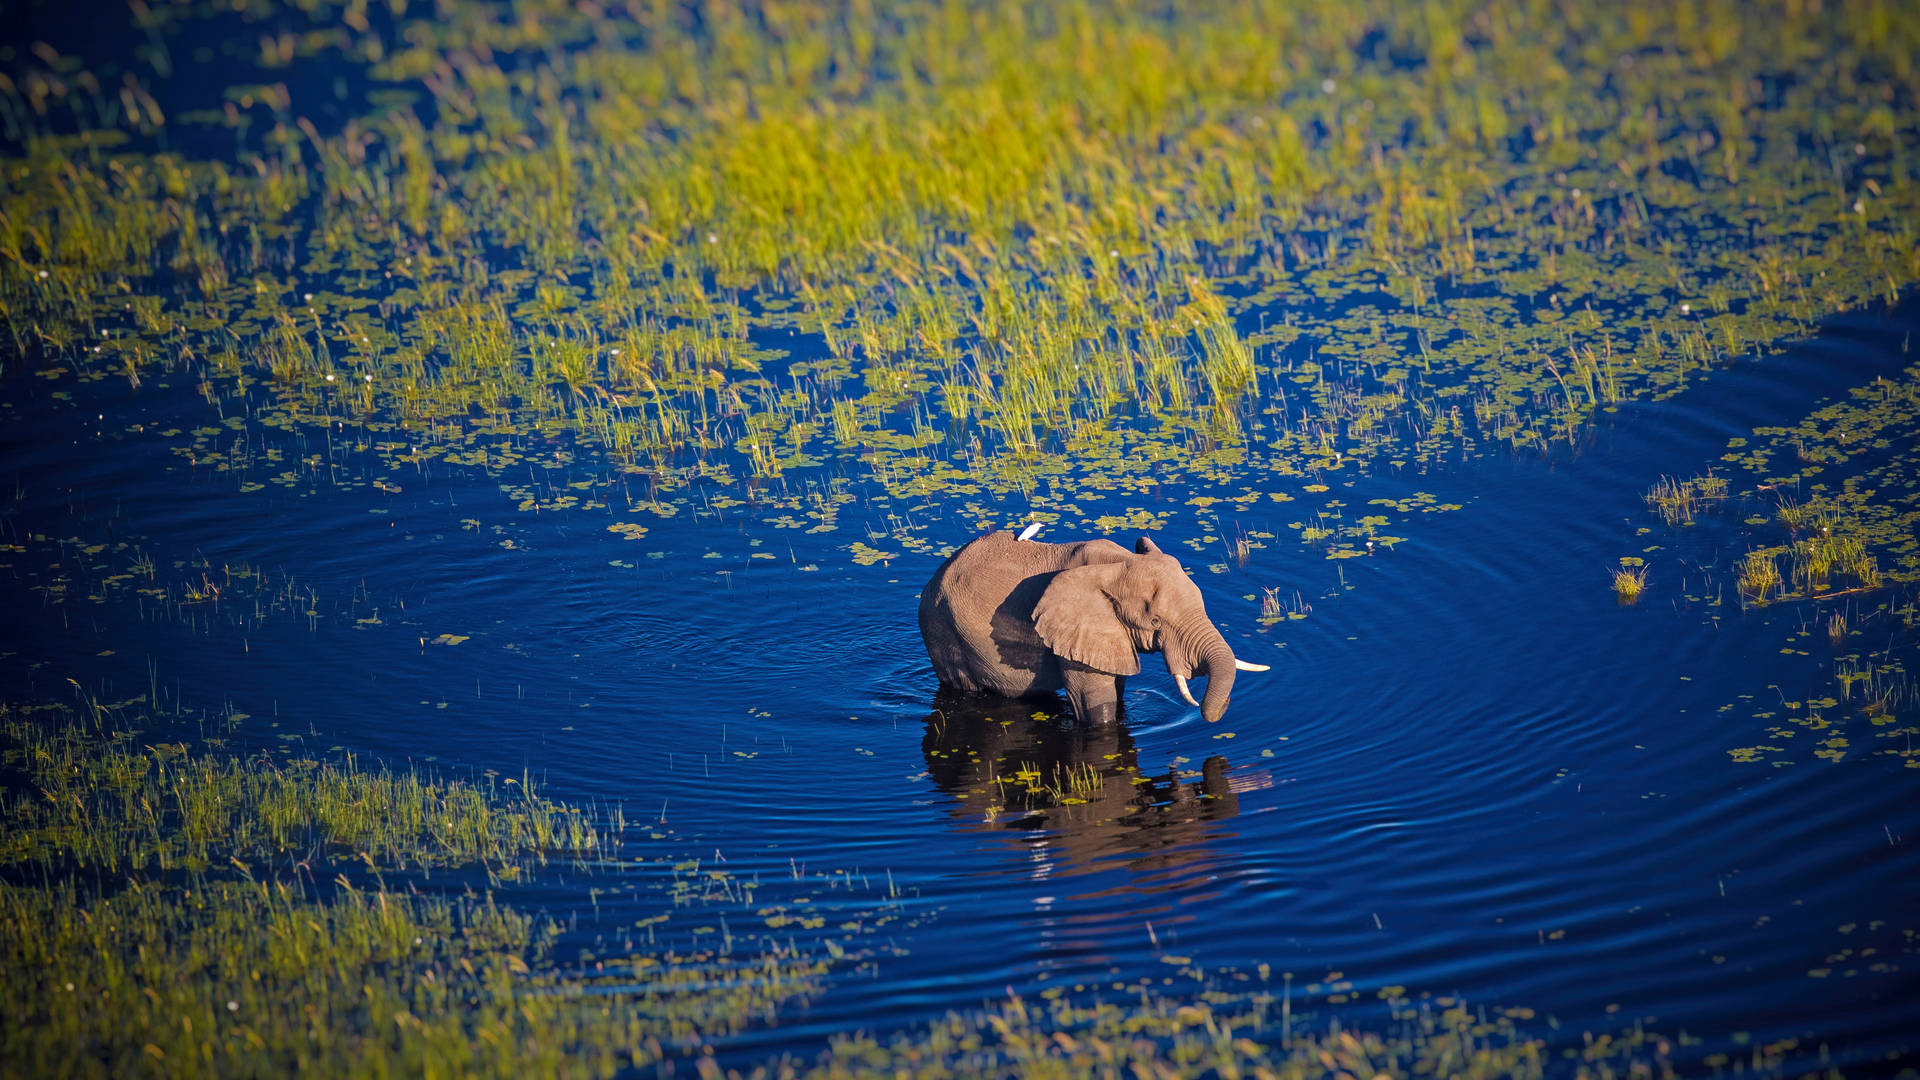 4k Elephant In Water Background